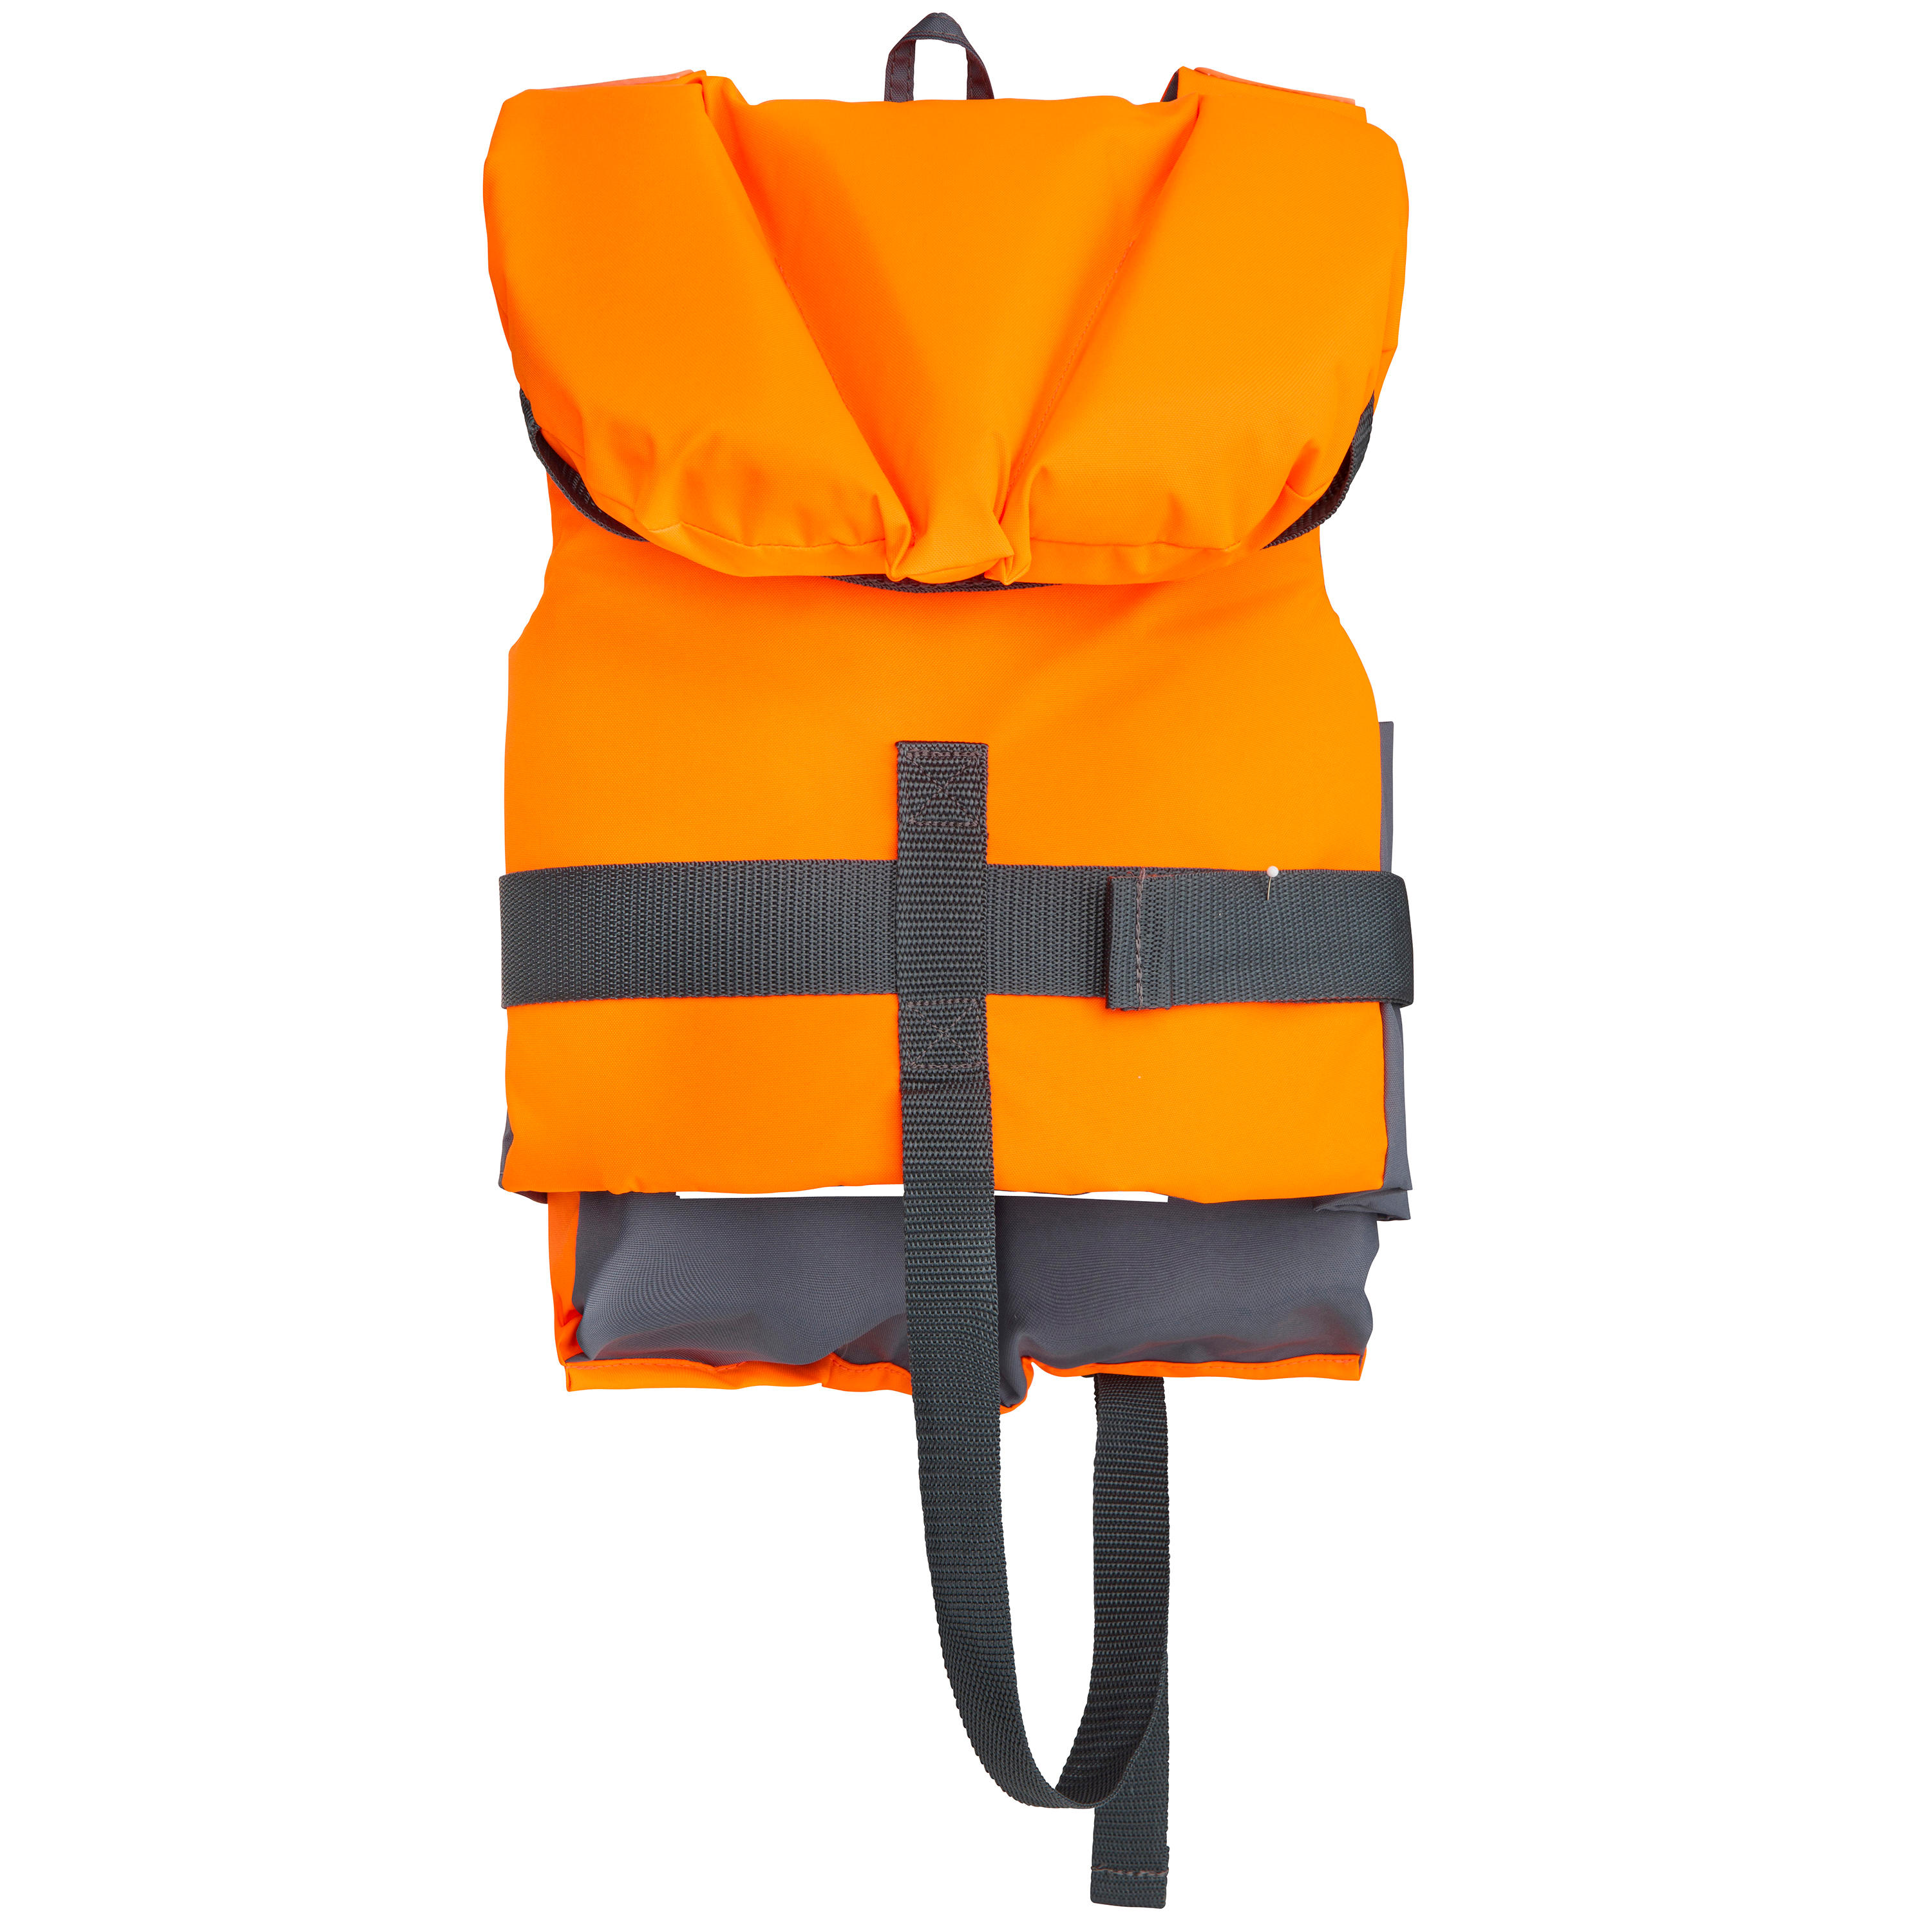 Kids' life jacket LJ100N Easy JR 15-40 kg - orange/grey 5/9